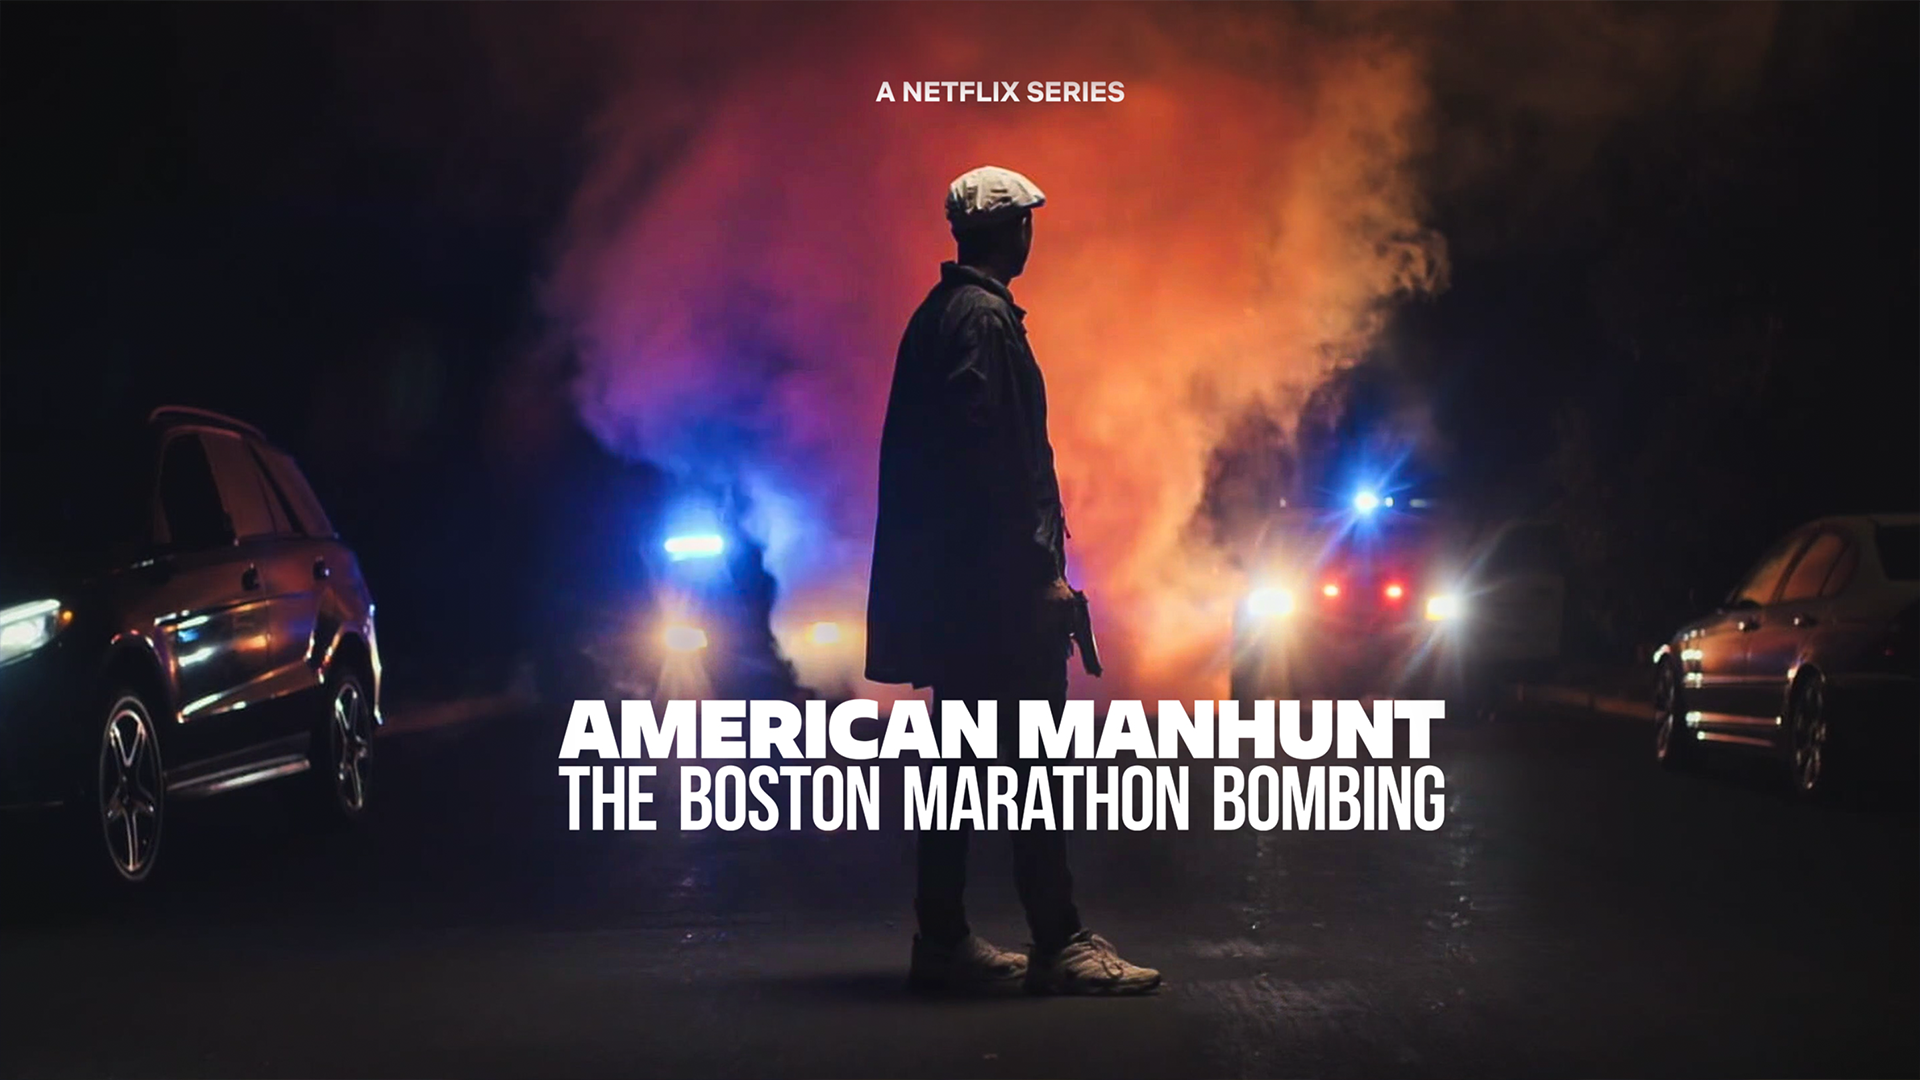 AMERICAN MANHUNT: THE BOSTON MARATHON BOMBING